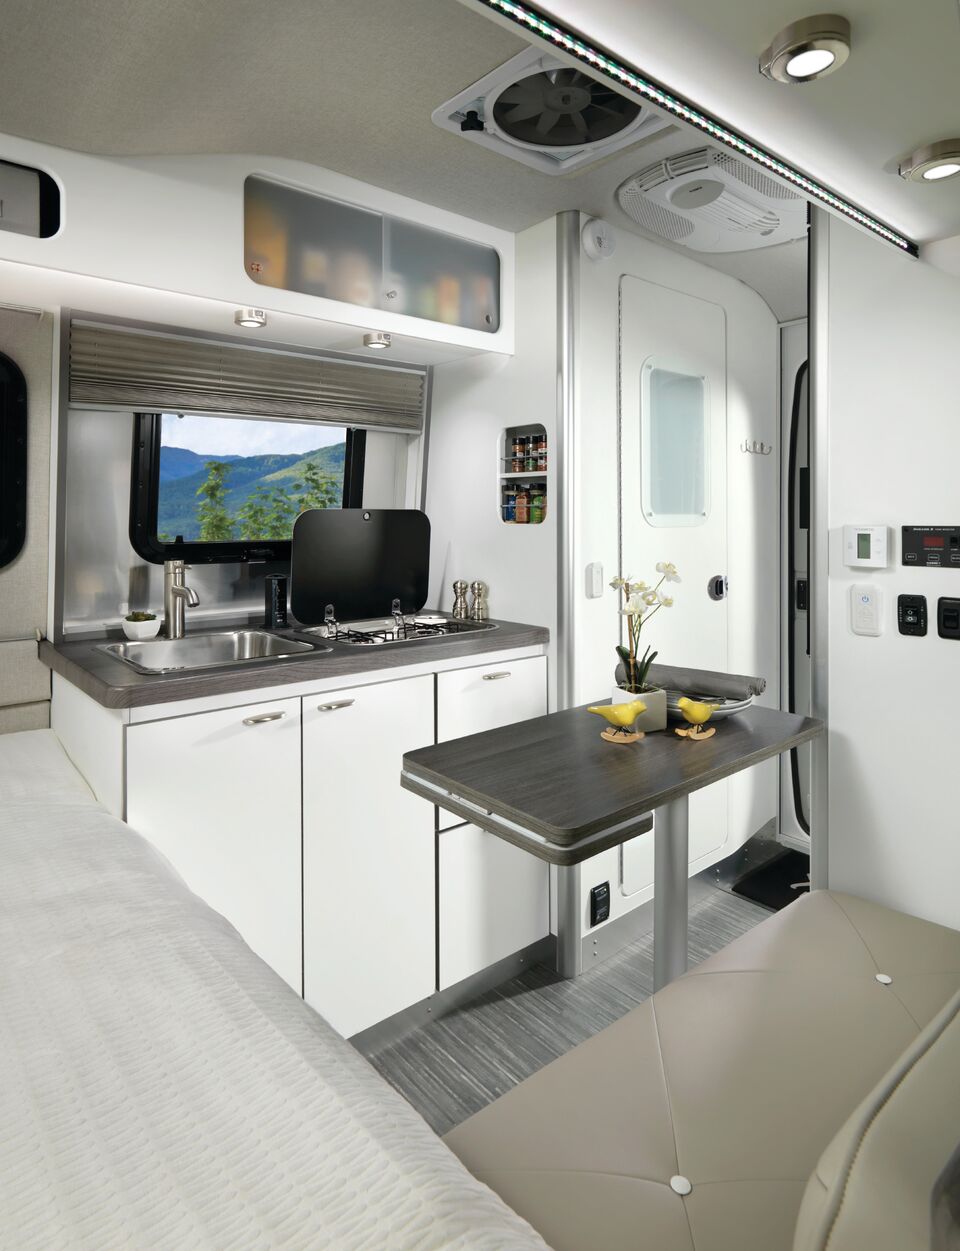 Windish RV Airstream Nest Travel Trailer Kitchen